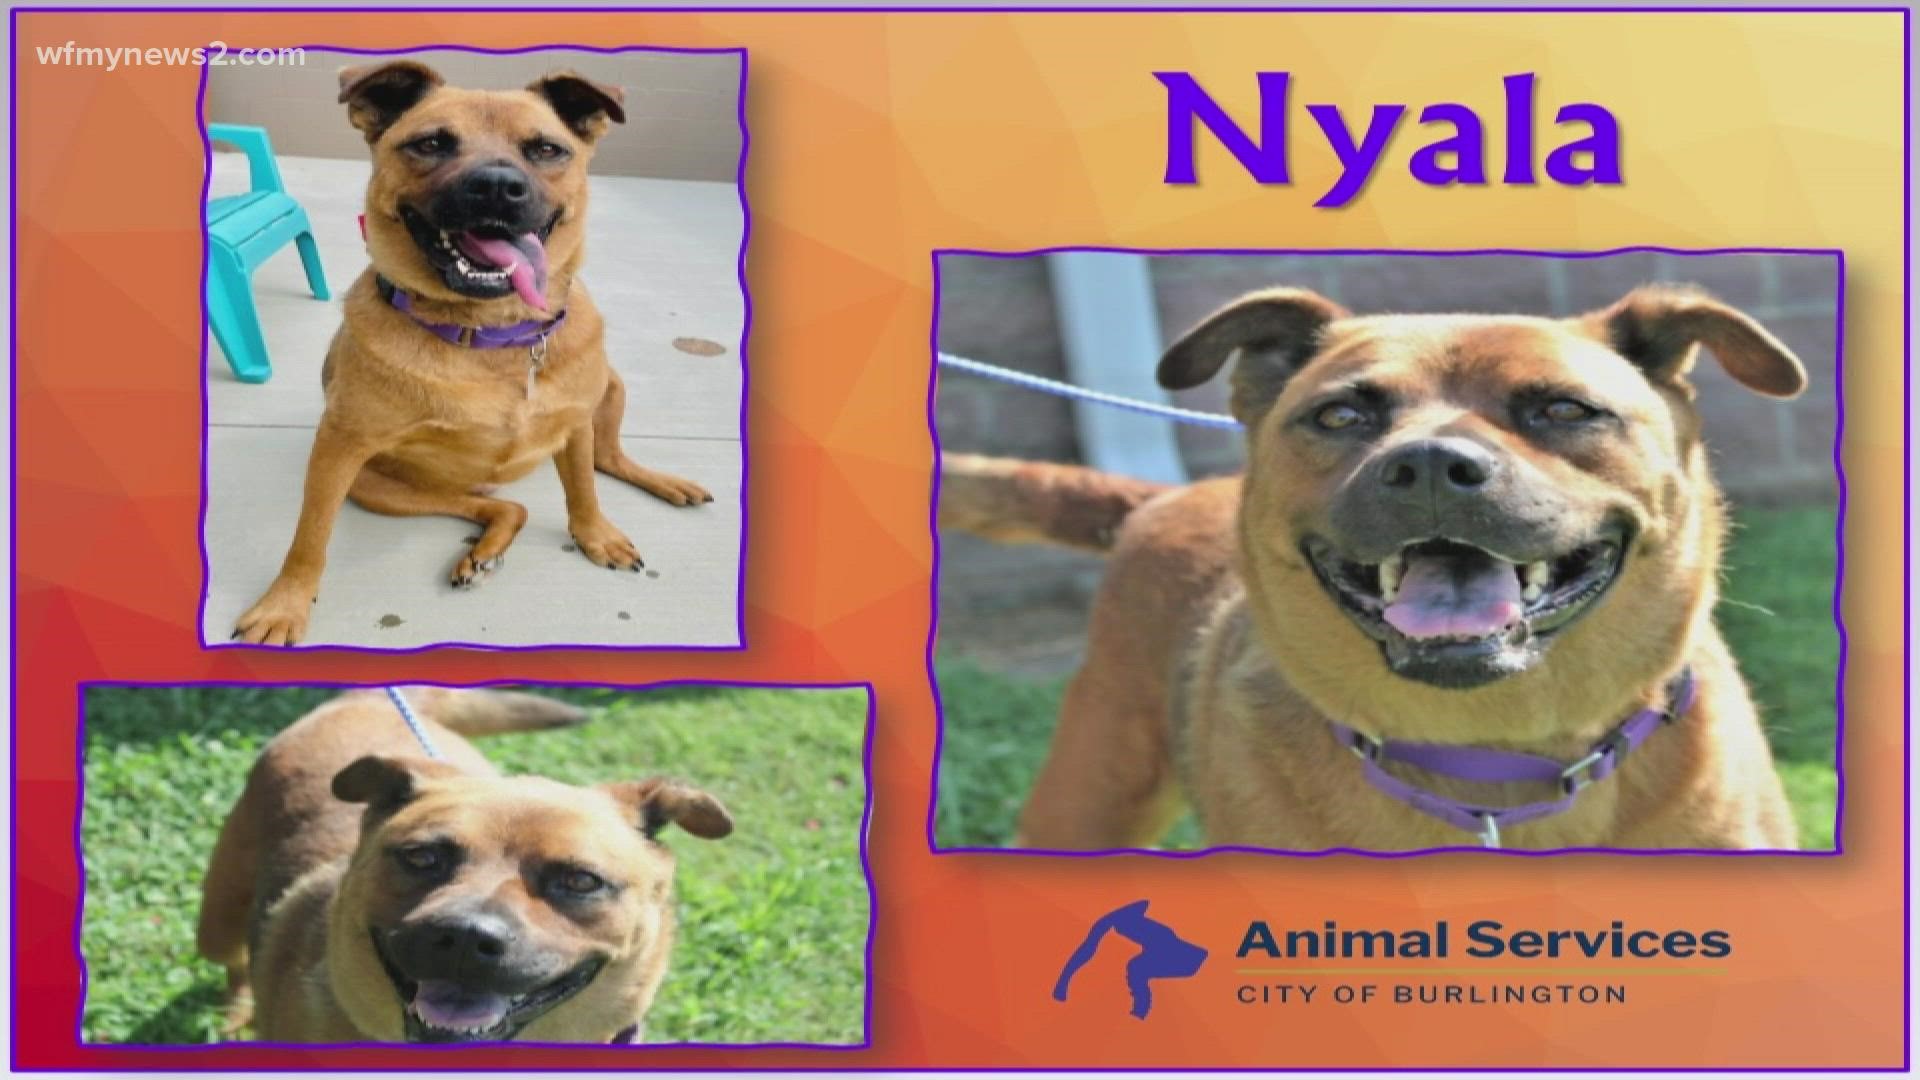 Let's get Nyala adopted!